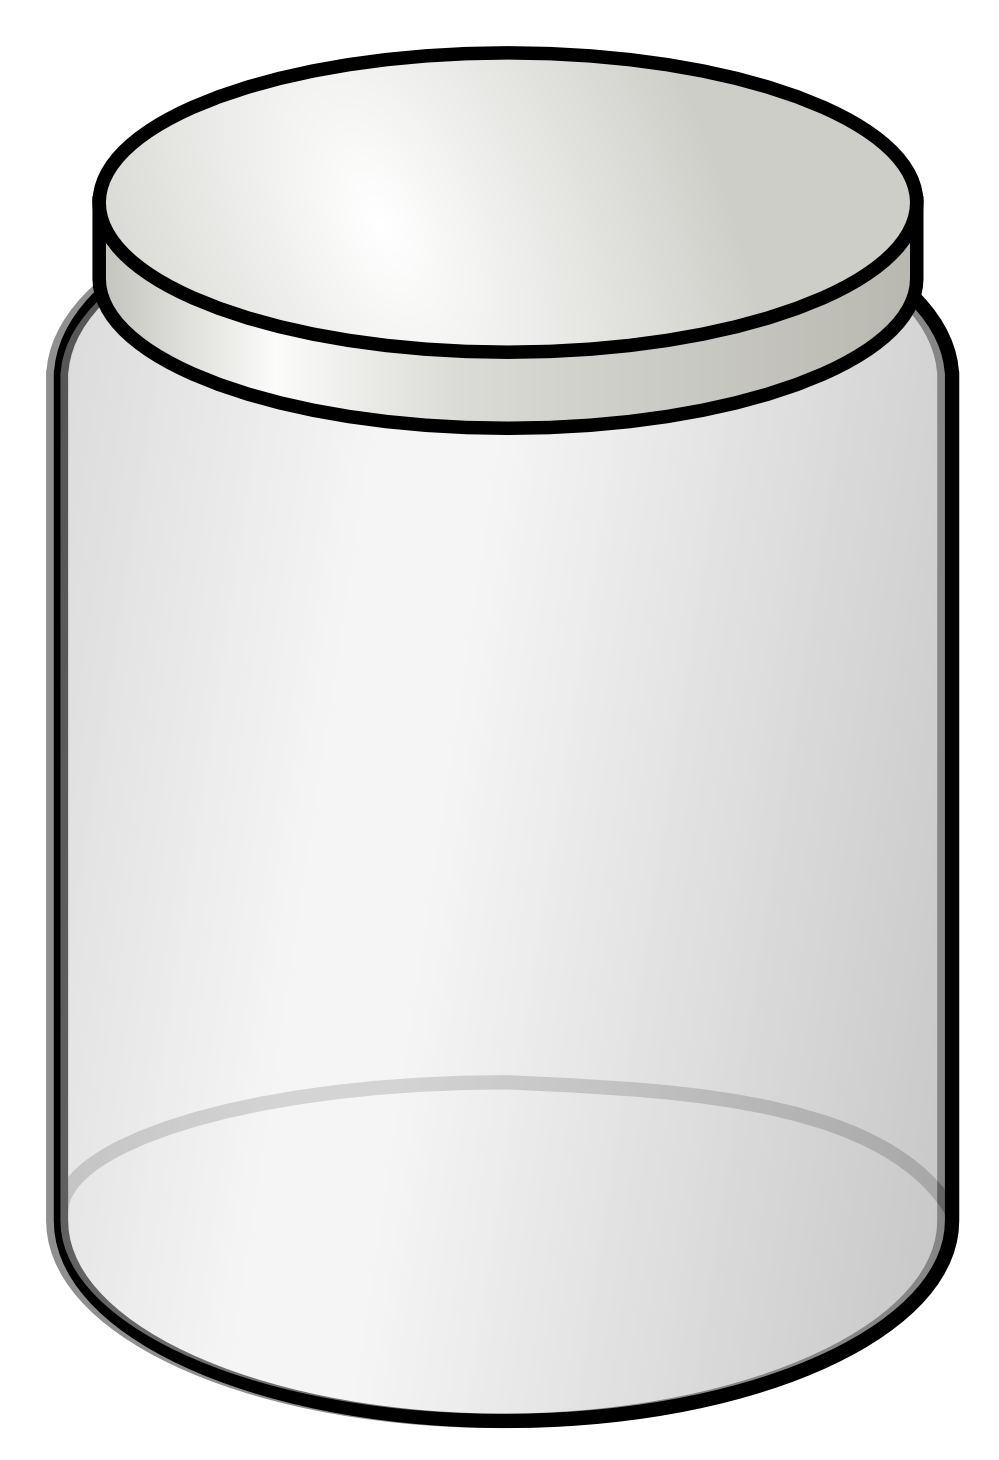 Clipart jar - ClipartFox